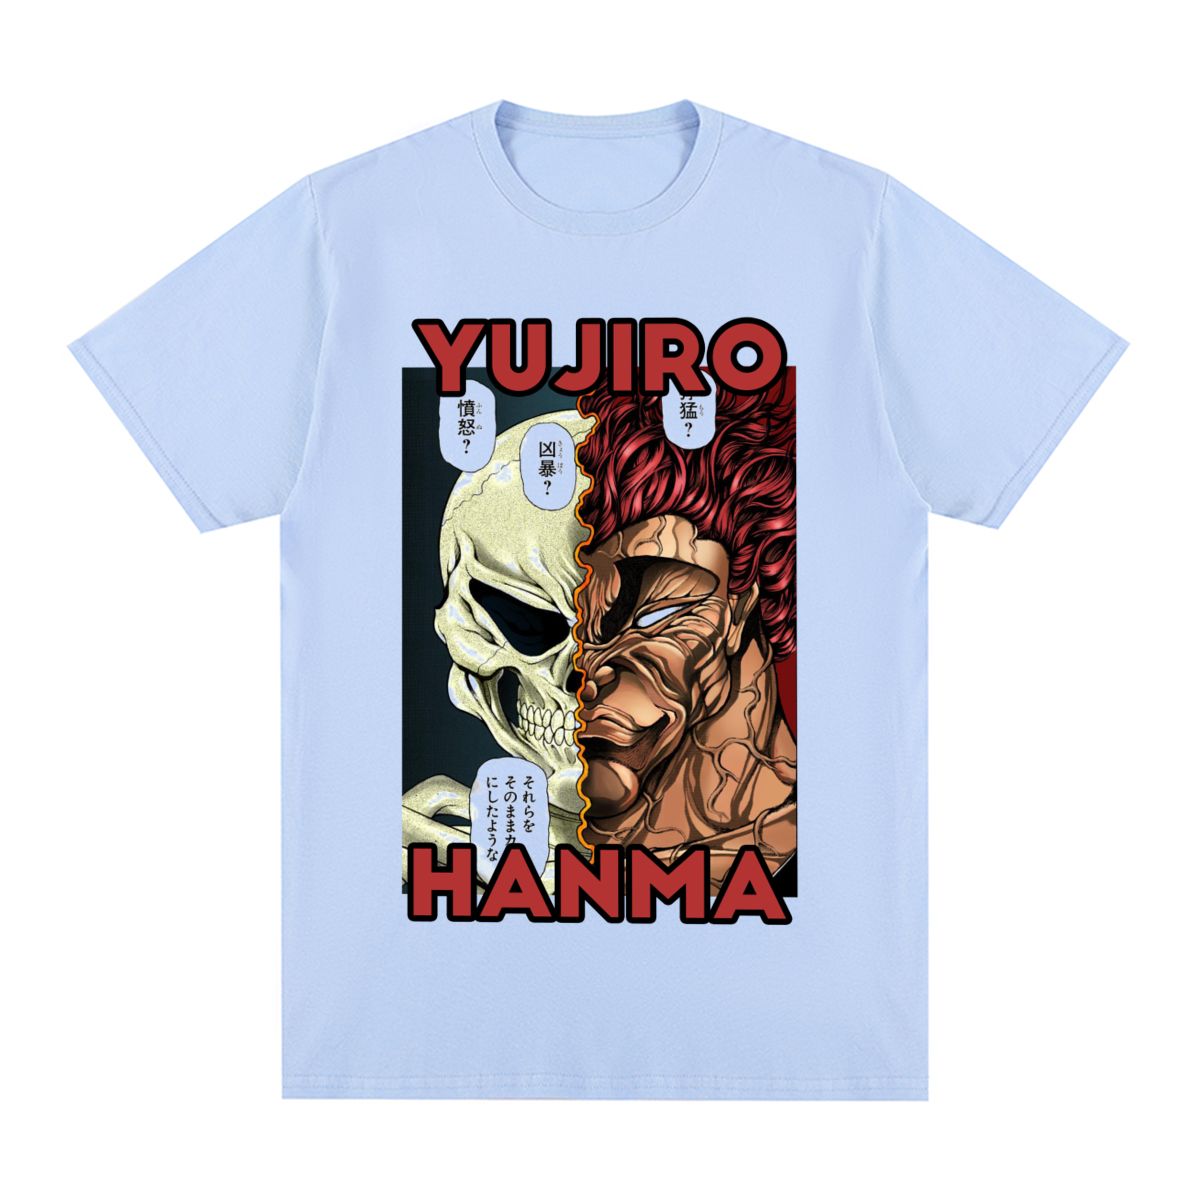 Yujiro Hanma Vintage T shirt